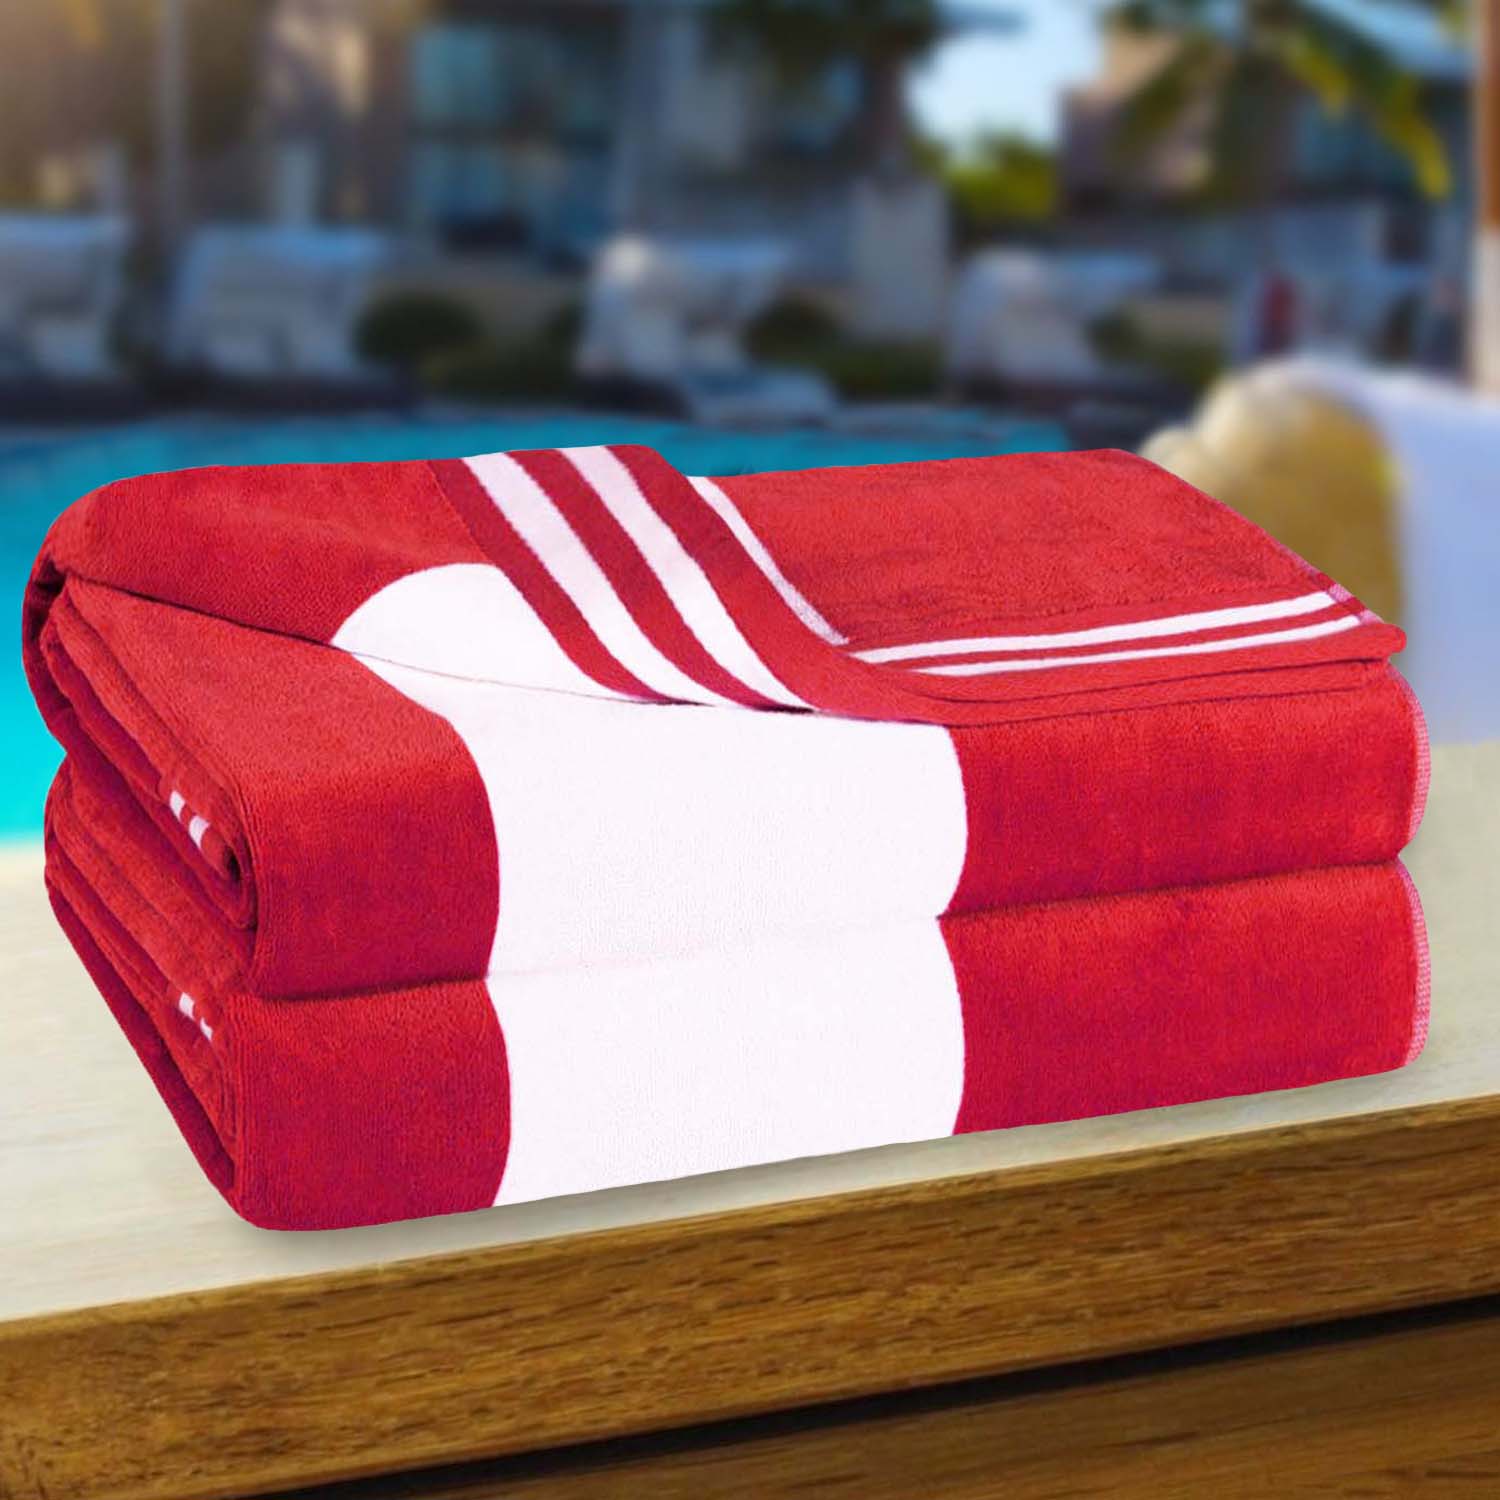 Superior Cabana Stripe Oversized Cotton Beach Towel Set Of 2,4,6 - Red